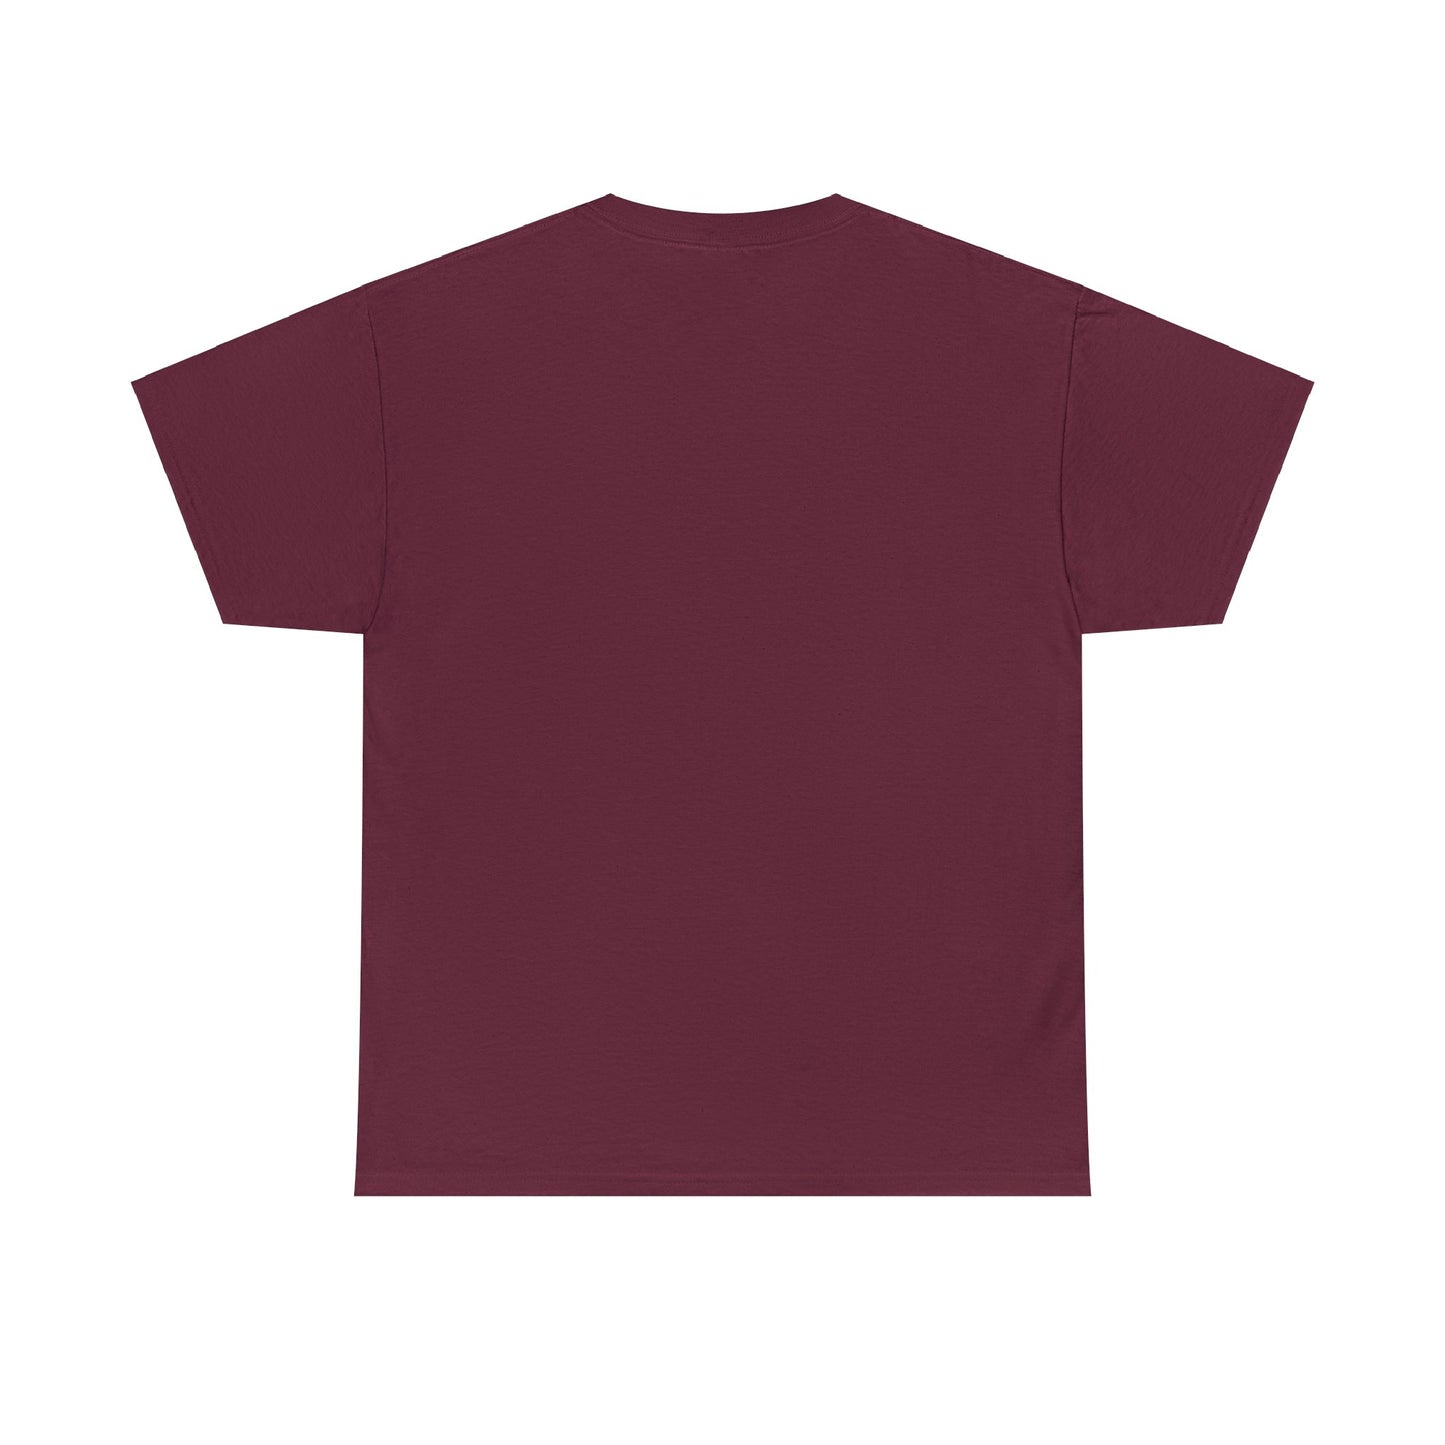 Blood Type: Rizz Negative T-Shirt